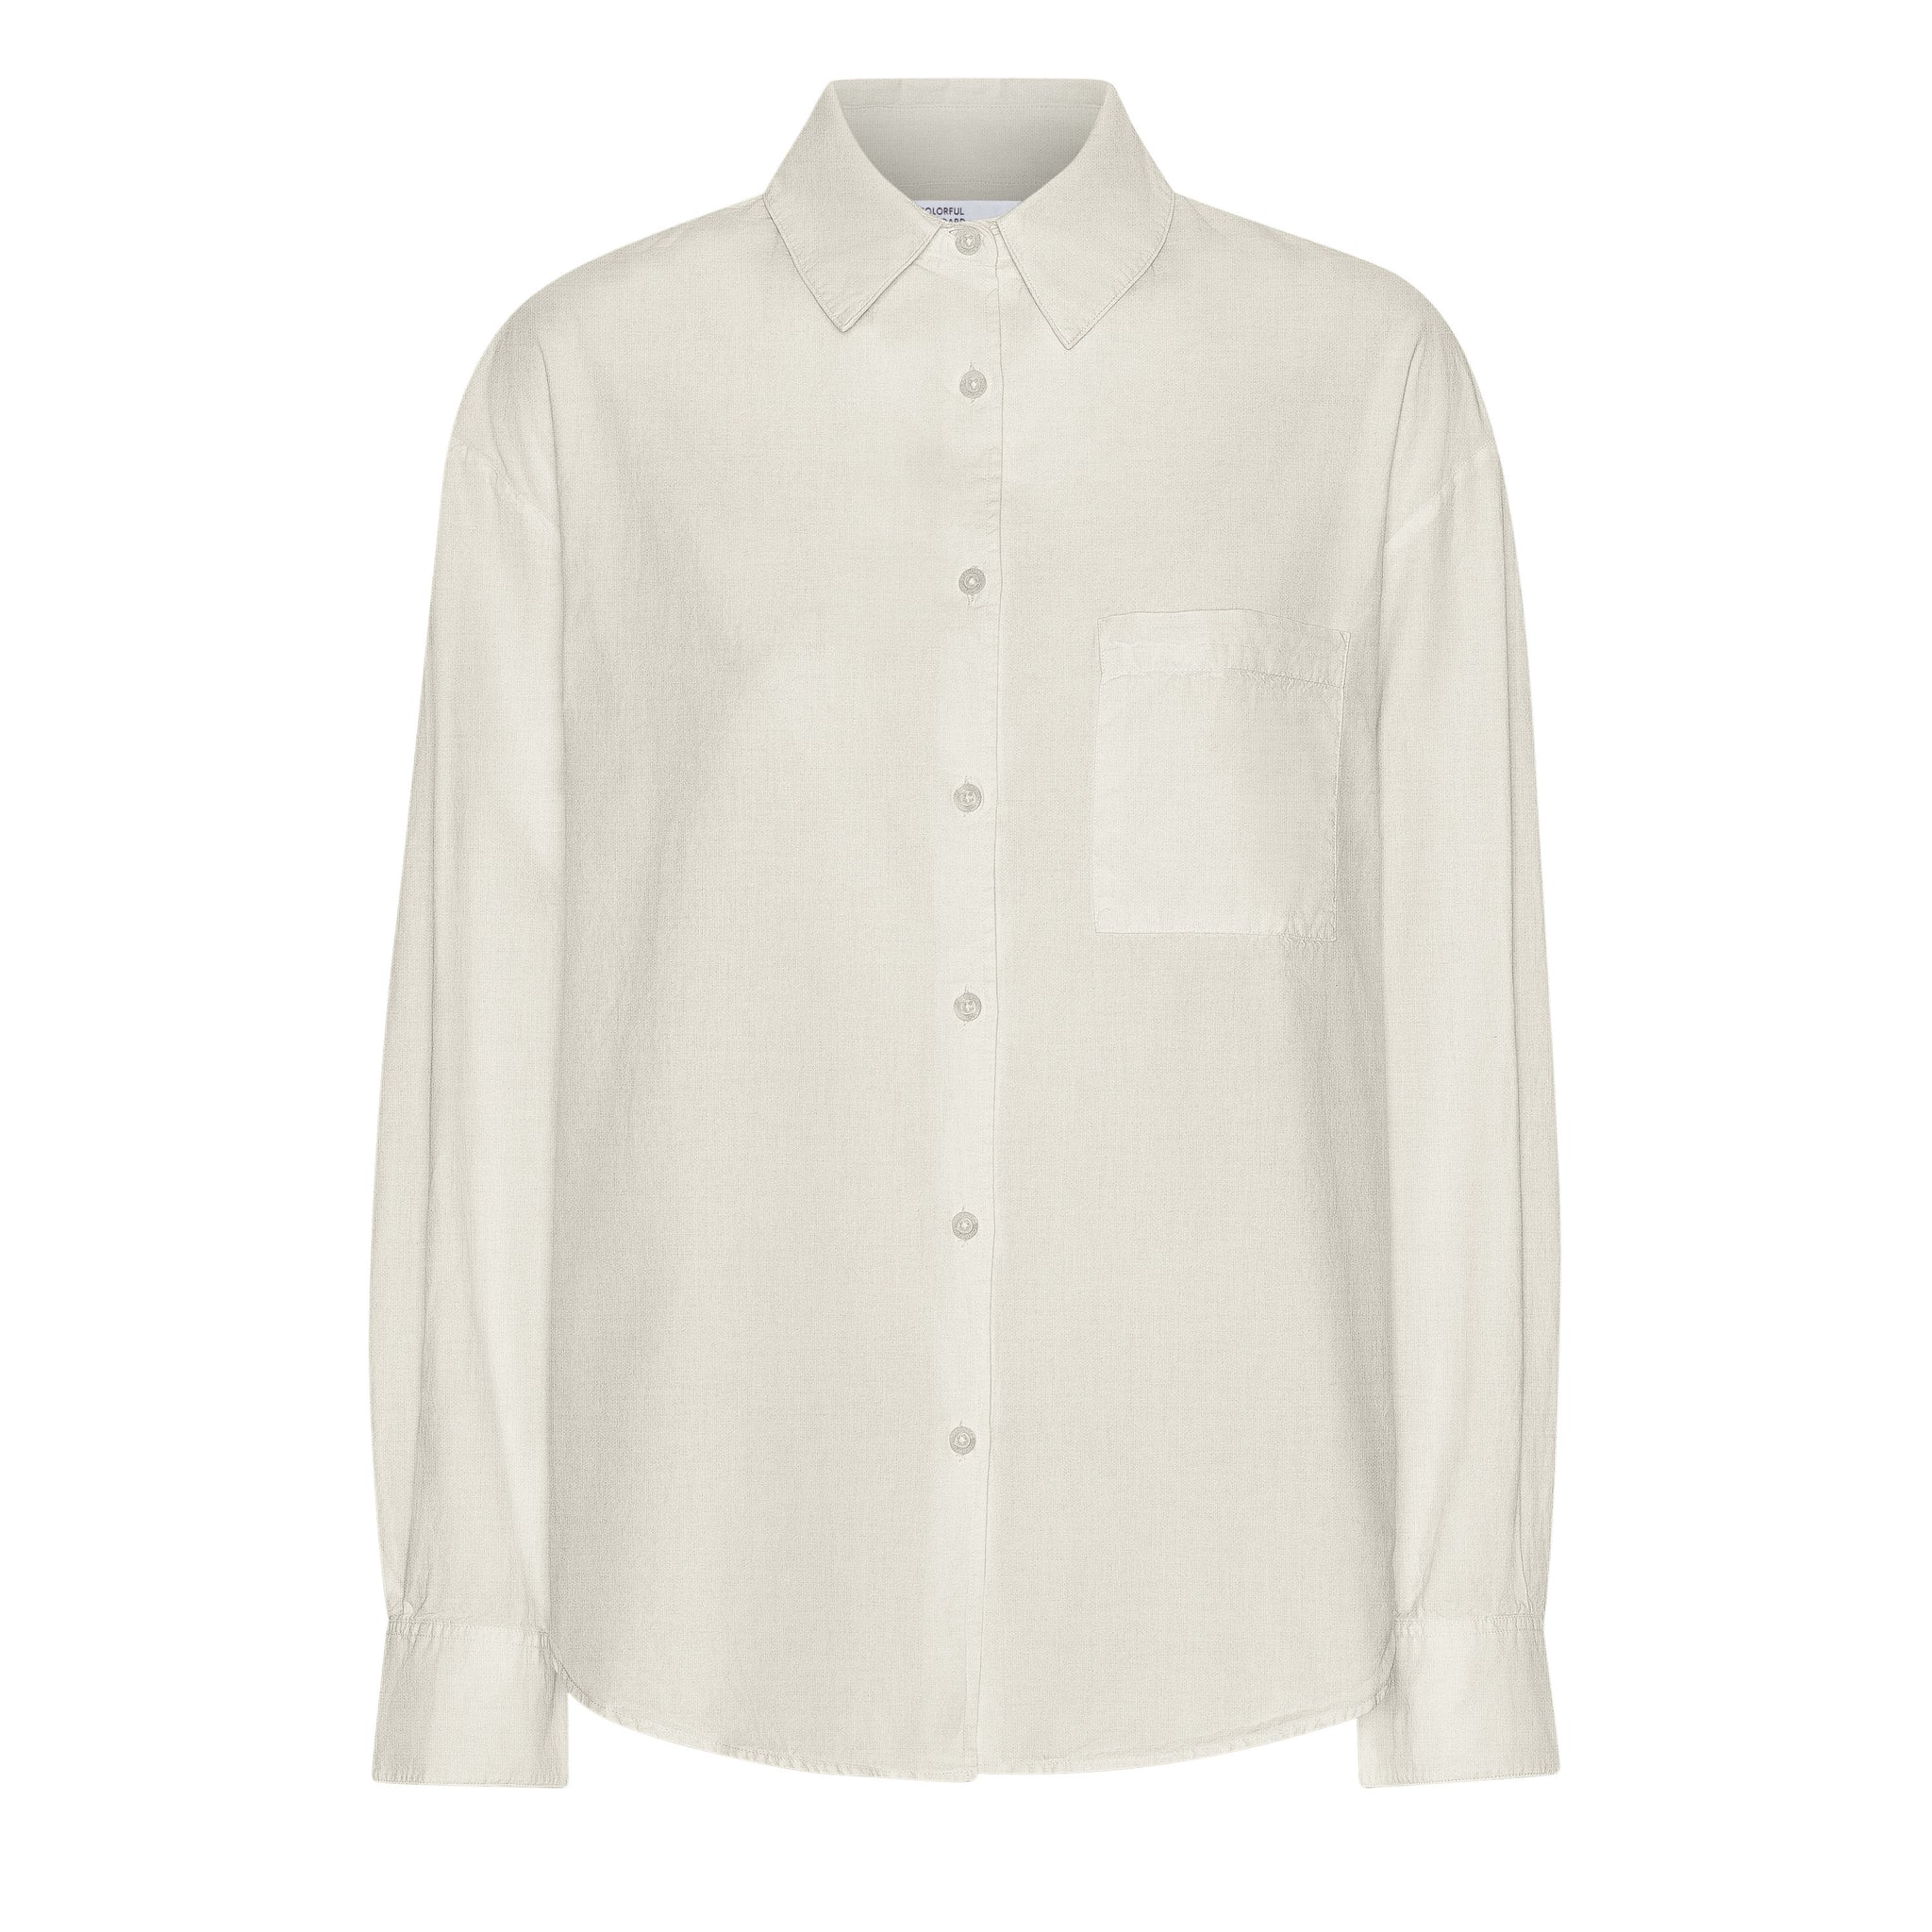 Colorful Standard Oversized Cotton Shirt - Ivory White